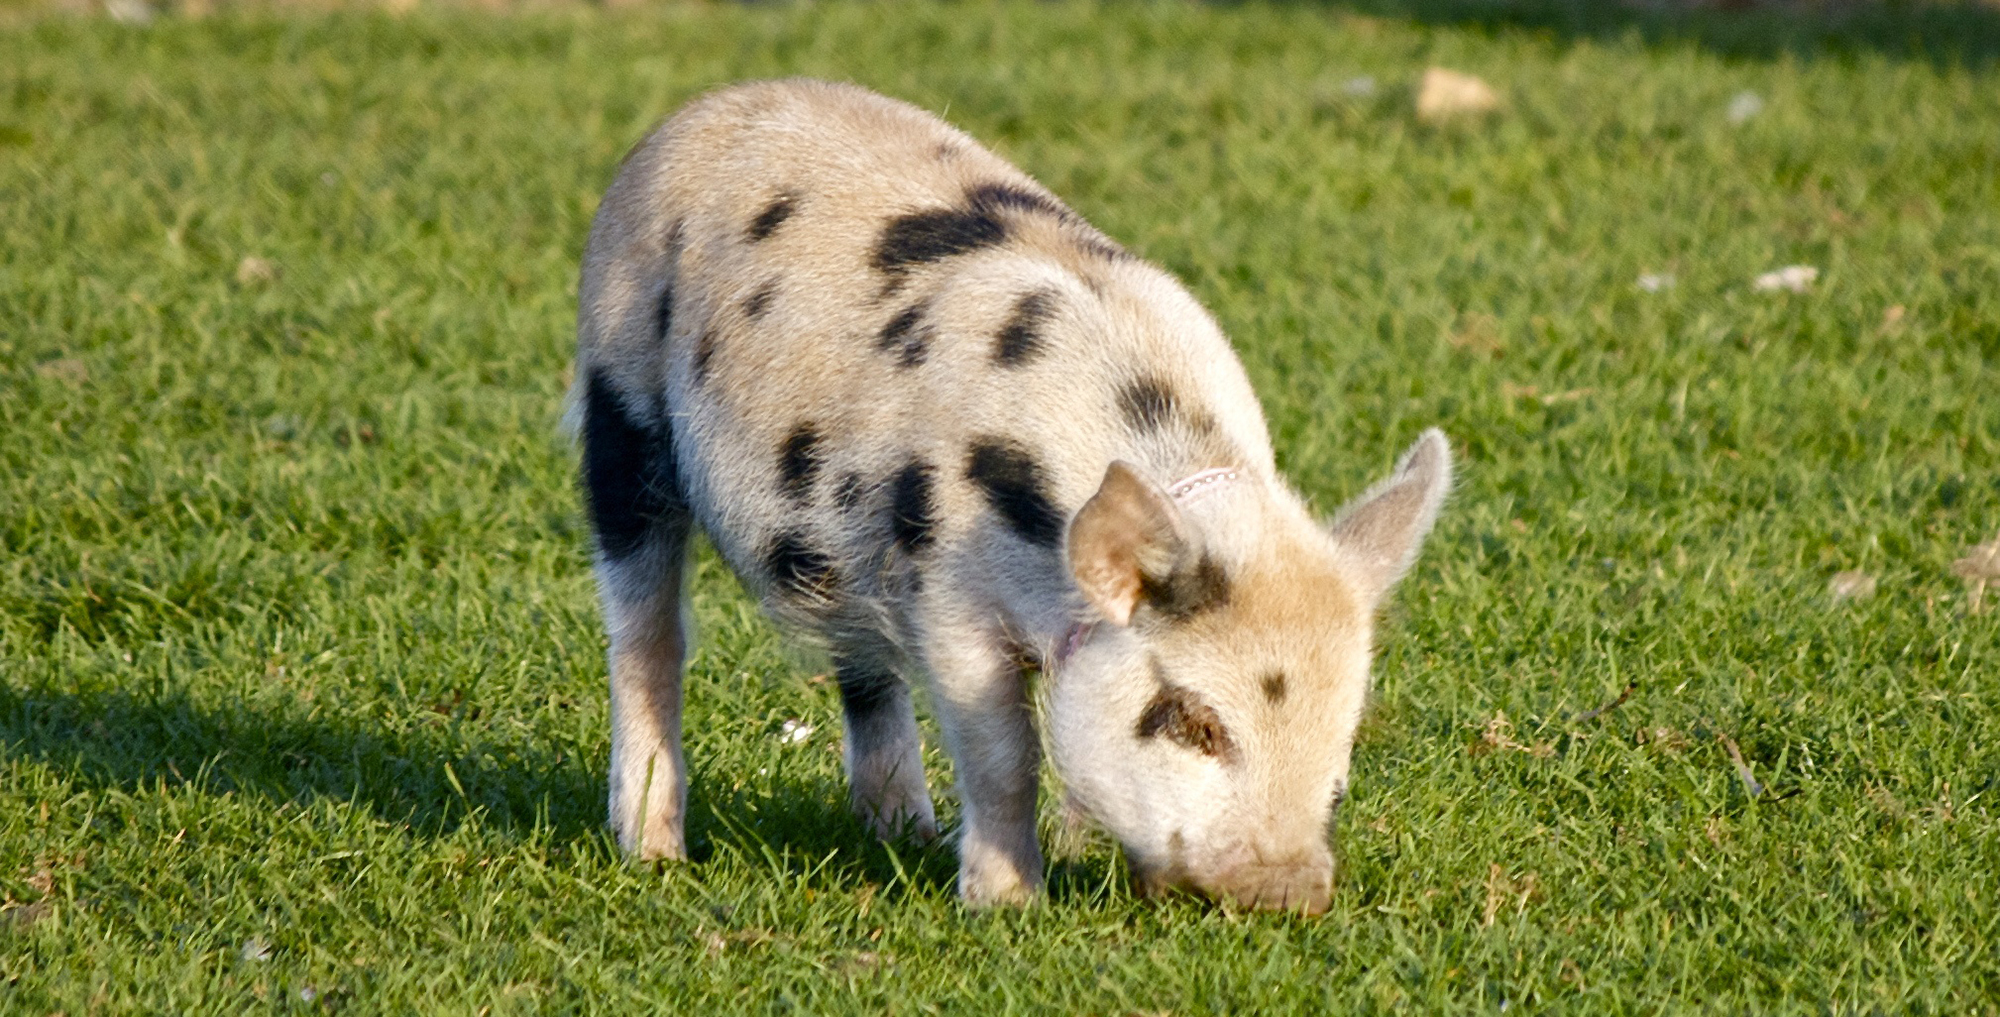 Baby pig on grass